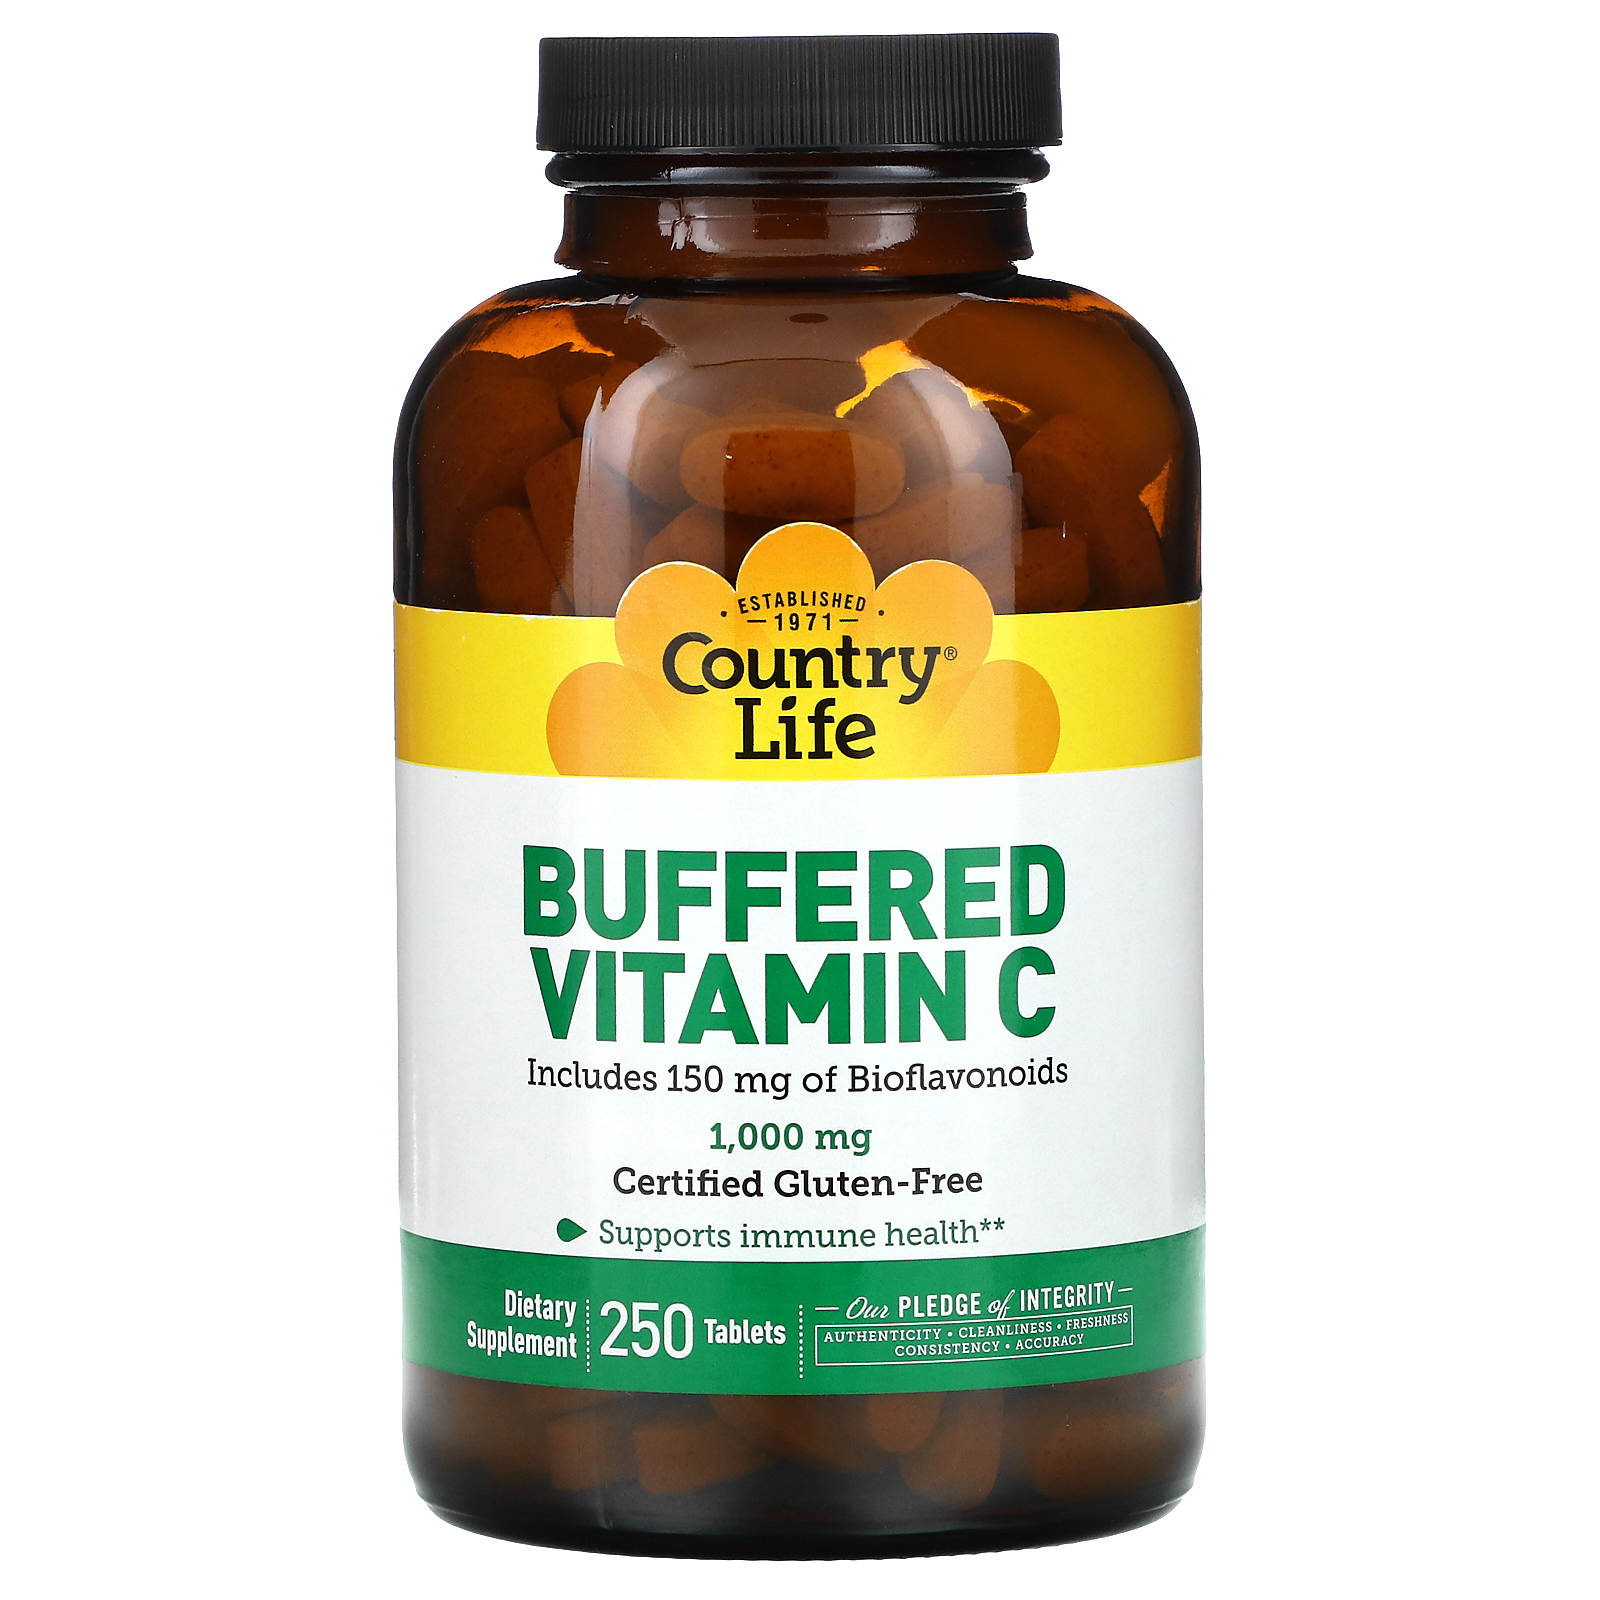 Buffered vitamin